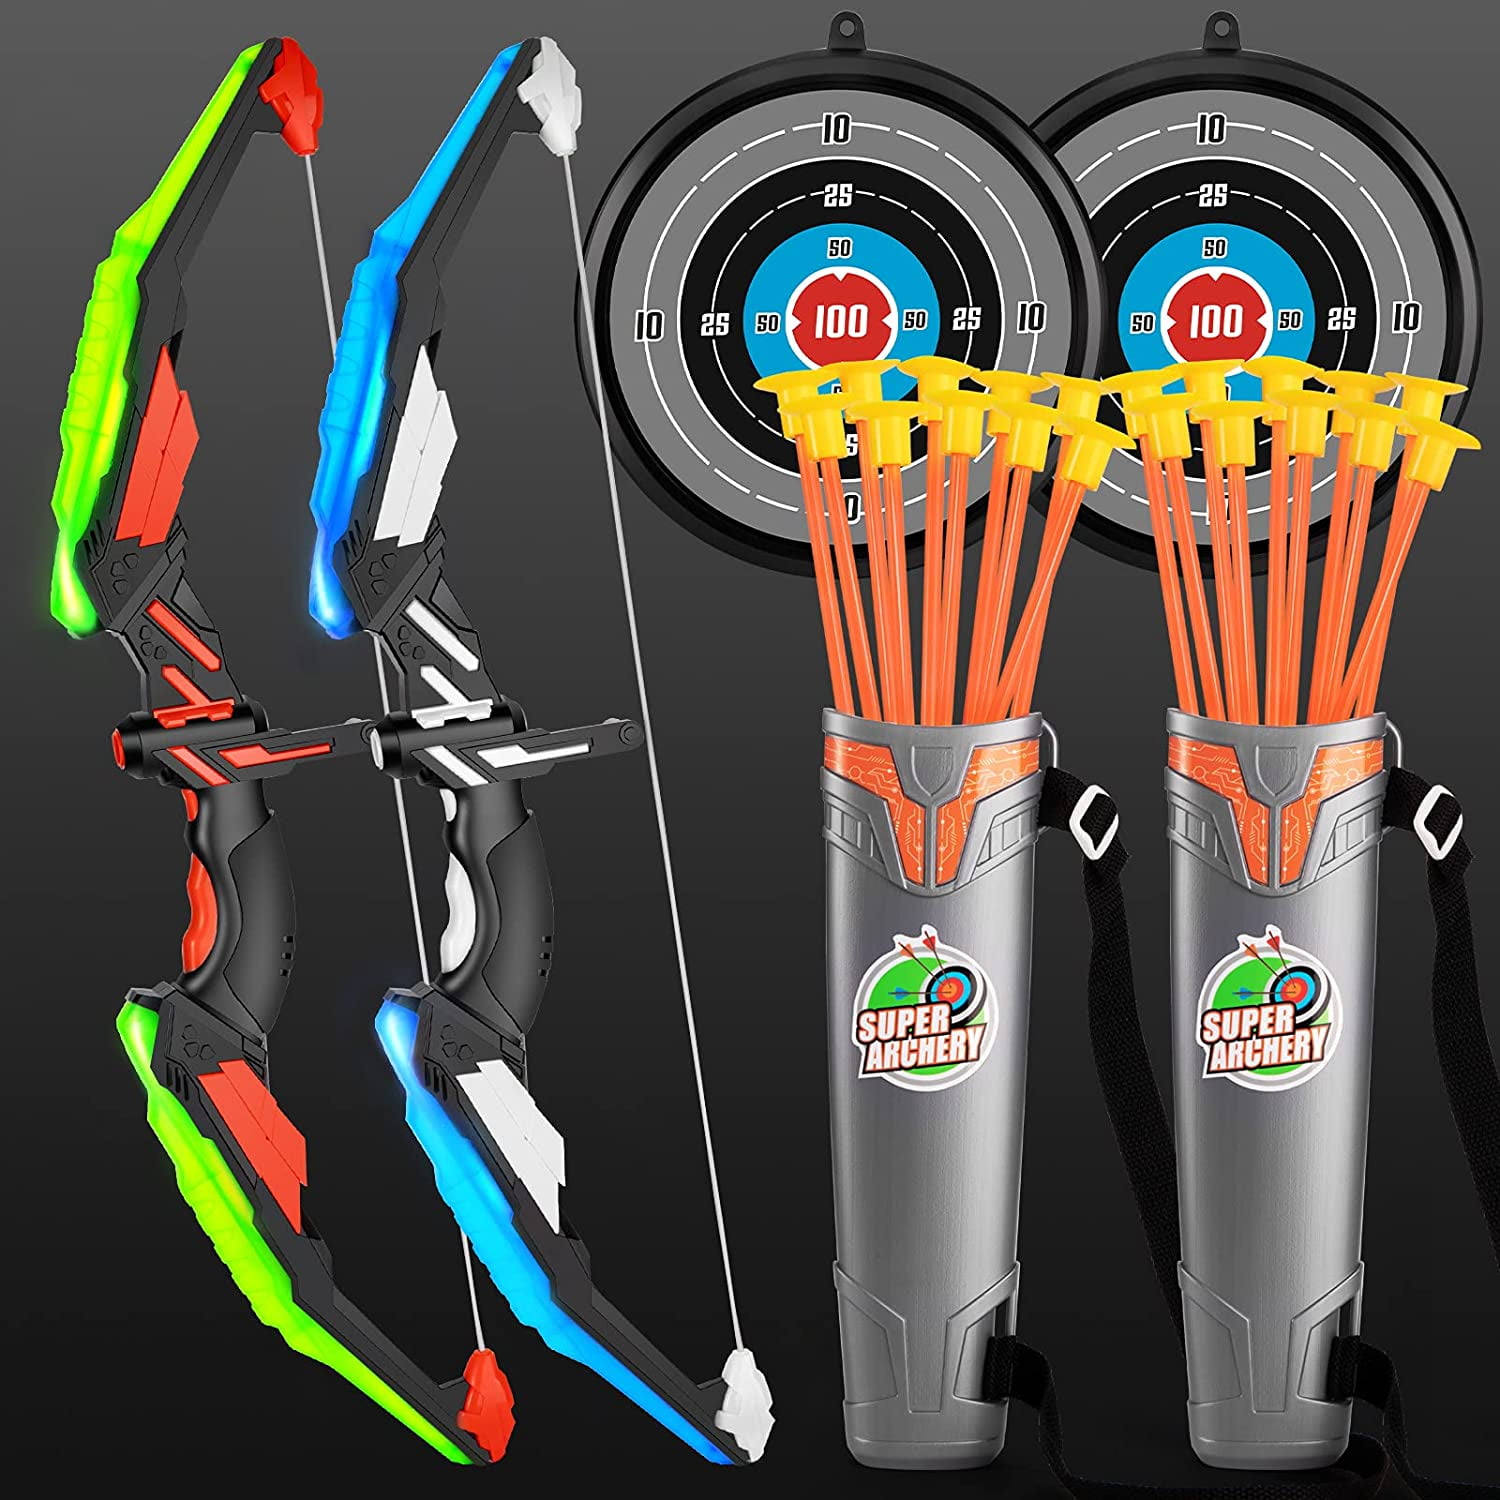 5PCS Stylish Kids Hunting Arrow Suction Cup Target Archery Equipment 